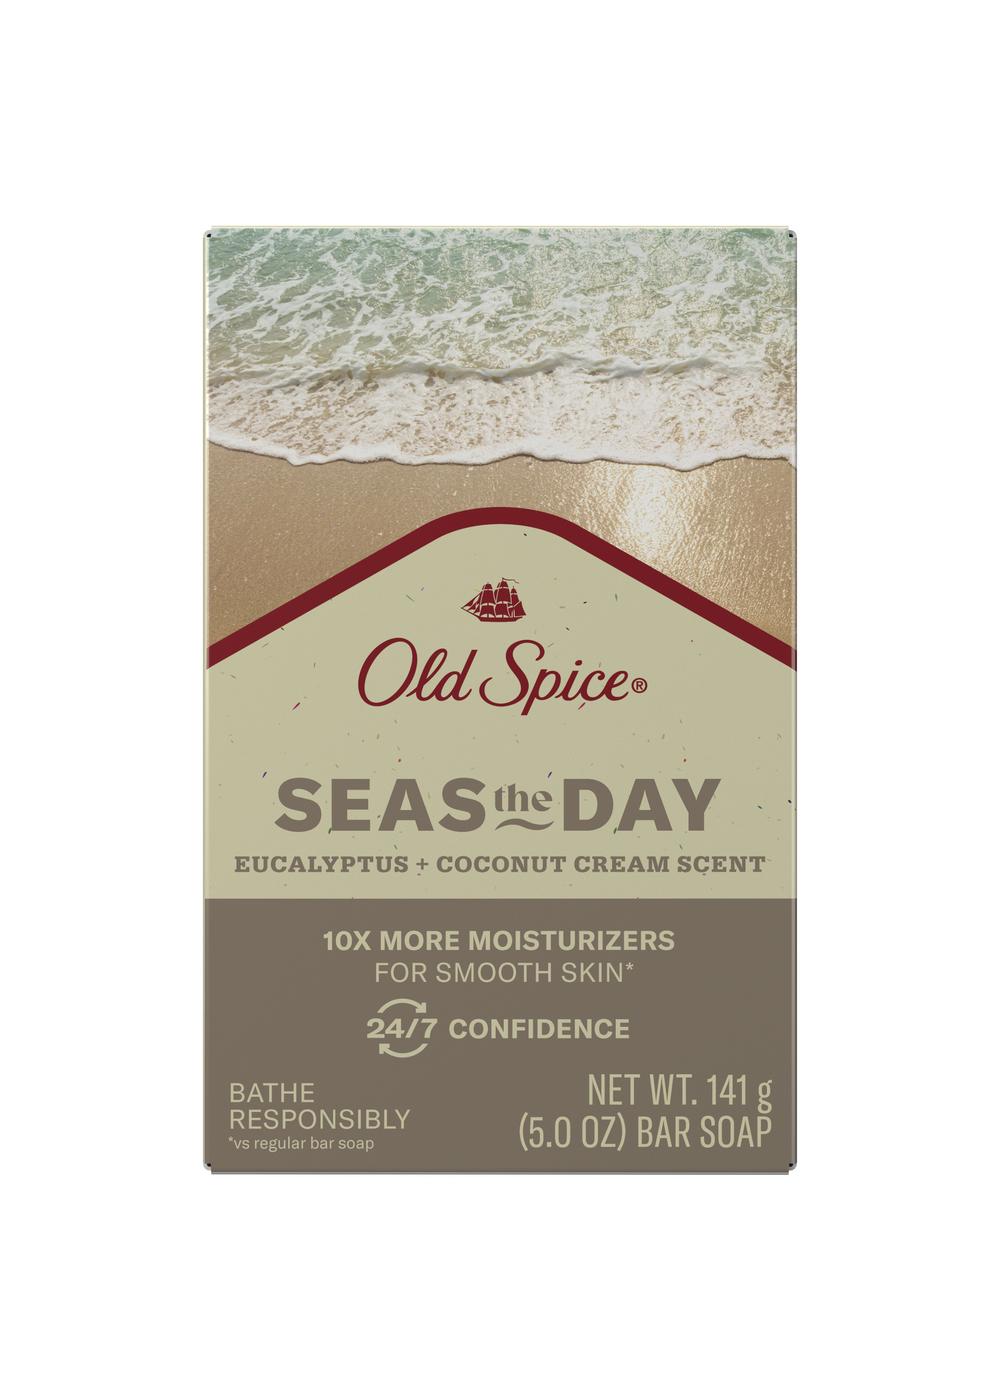 Old Spice Seas The Day Bar Soap - Eucalyptus & Coconut Cream; image 2 of 2